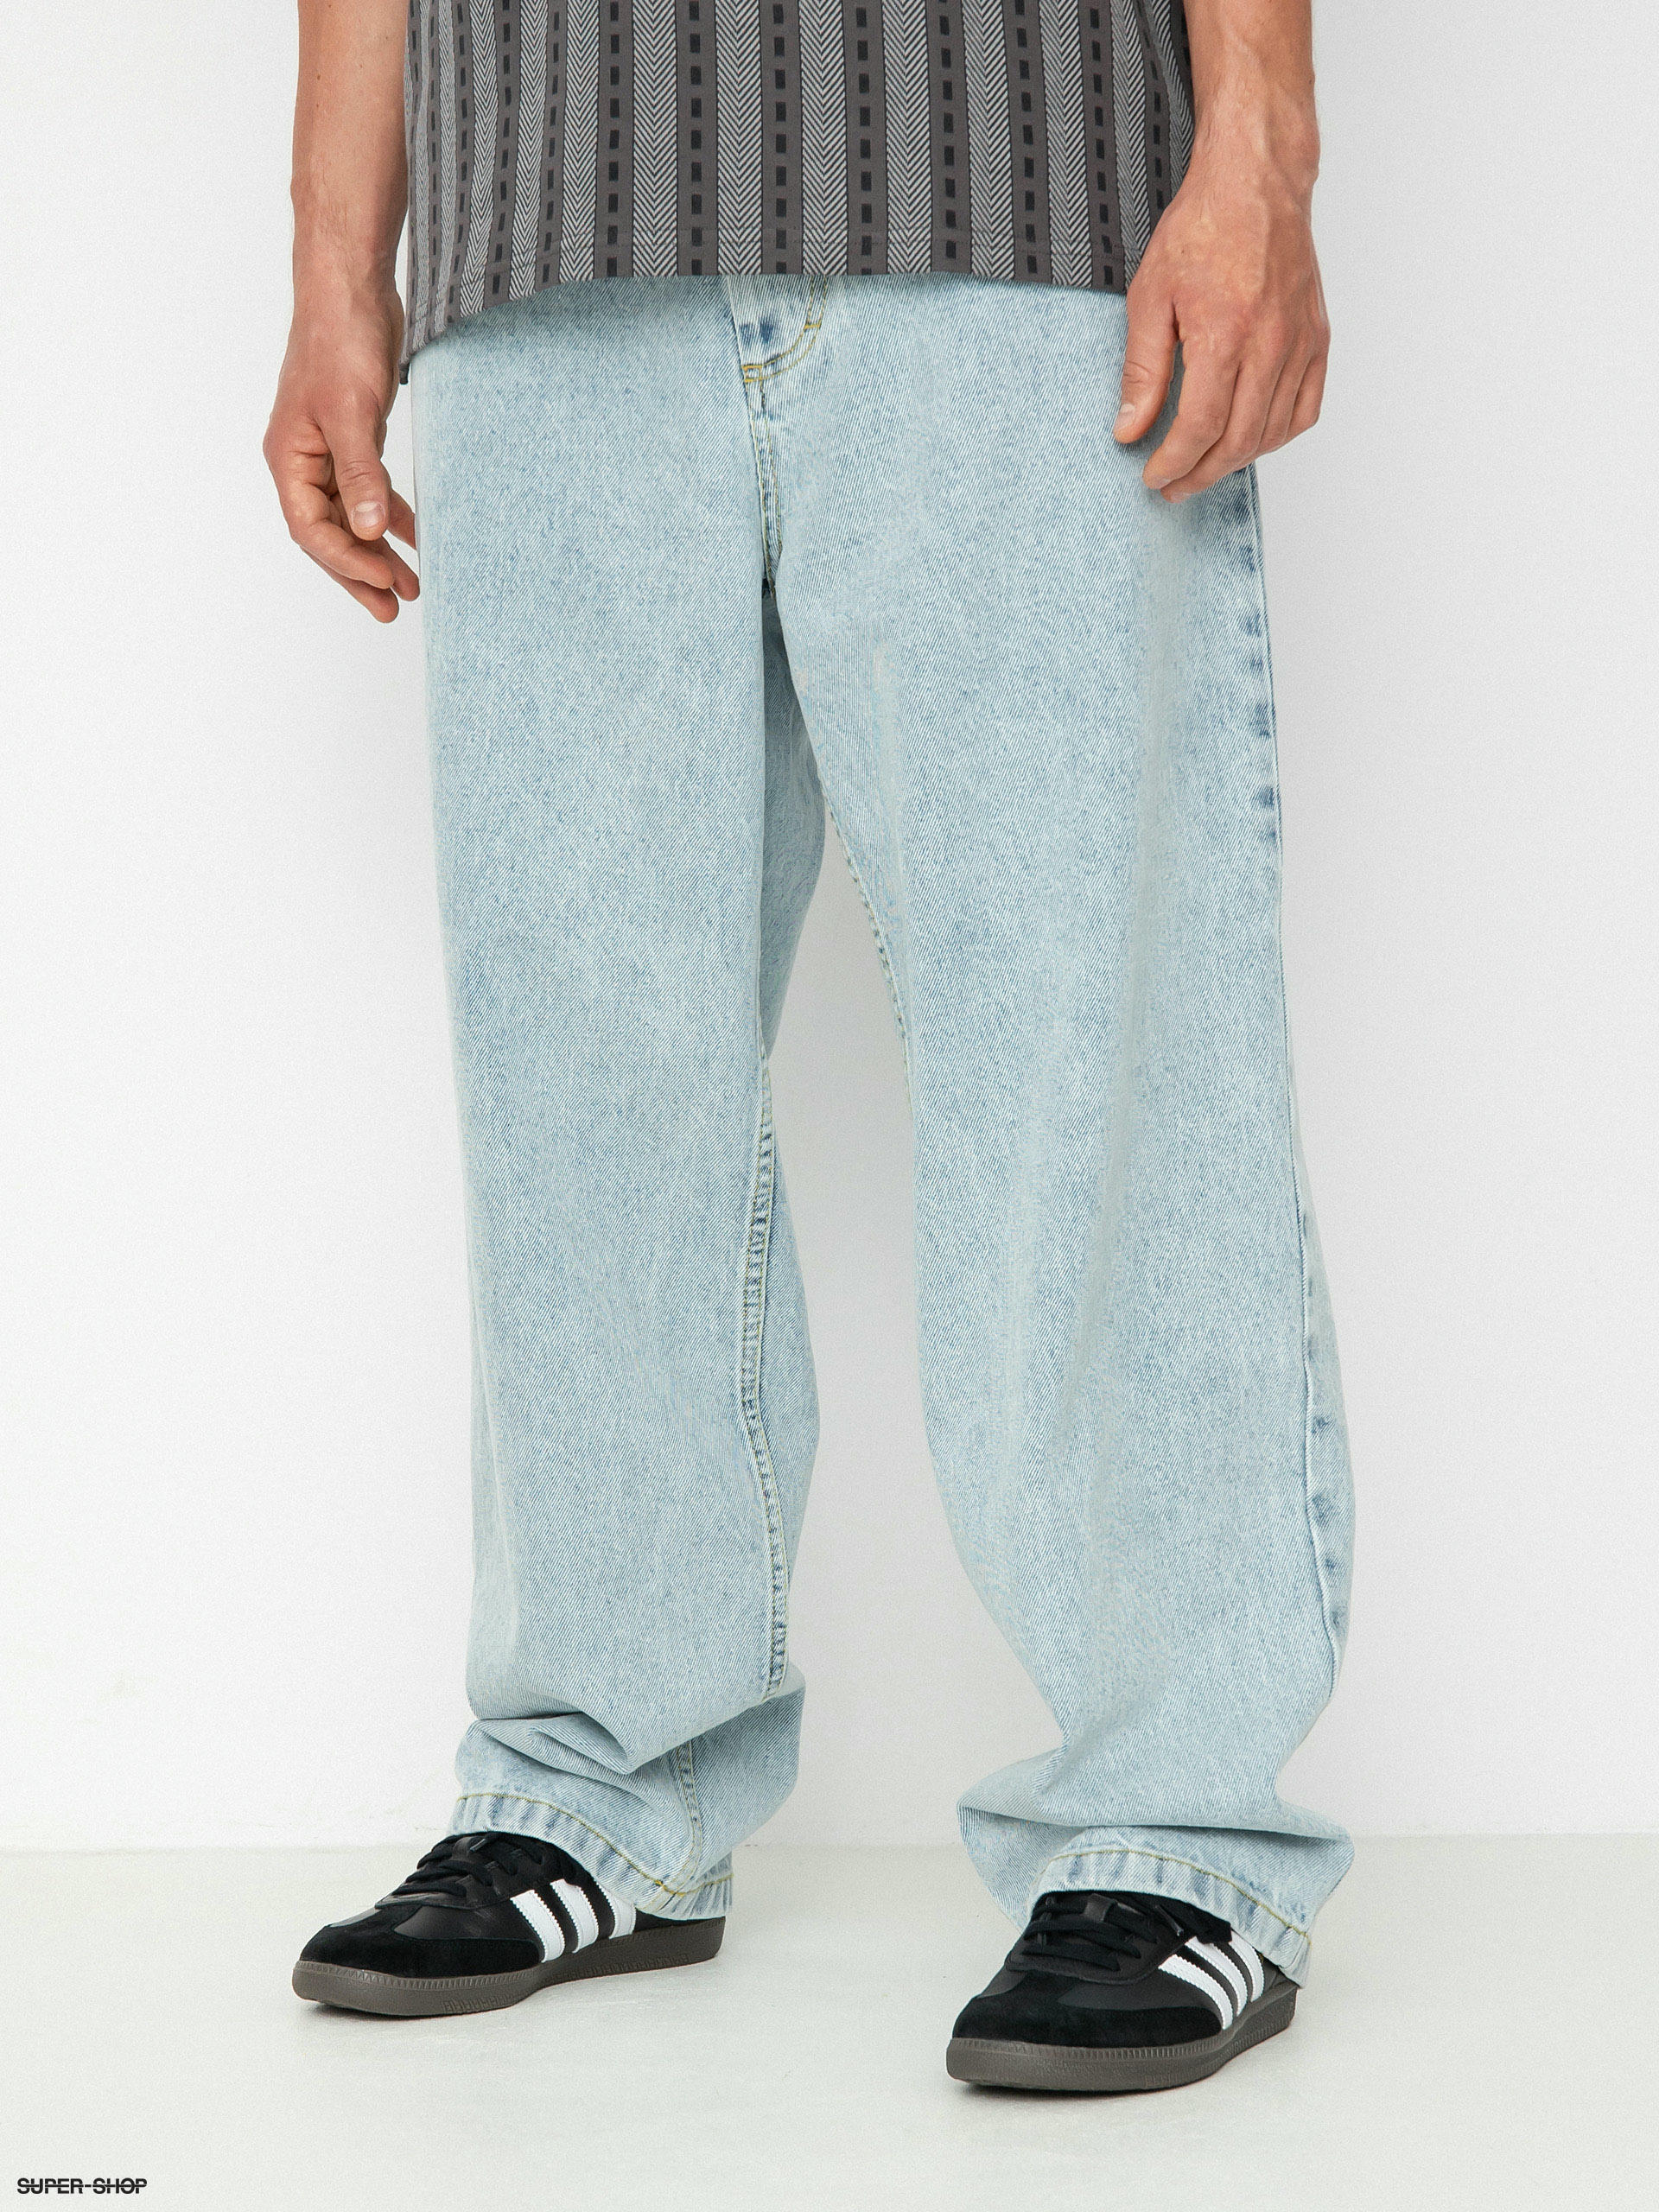 Polar Skate Big Boy Jeans Pants (light blue)